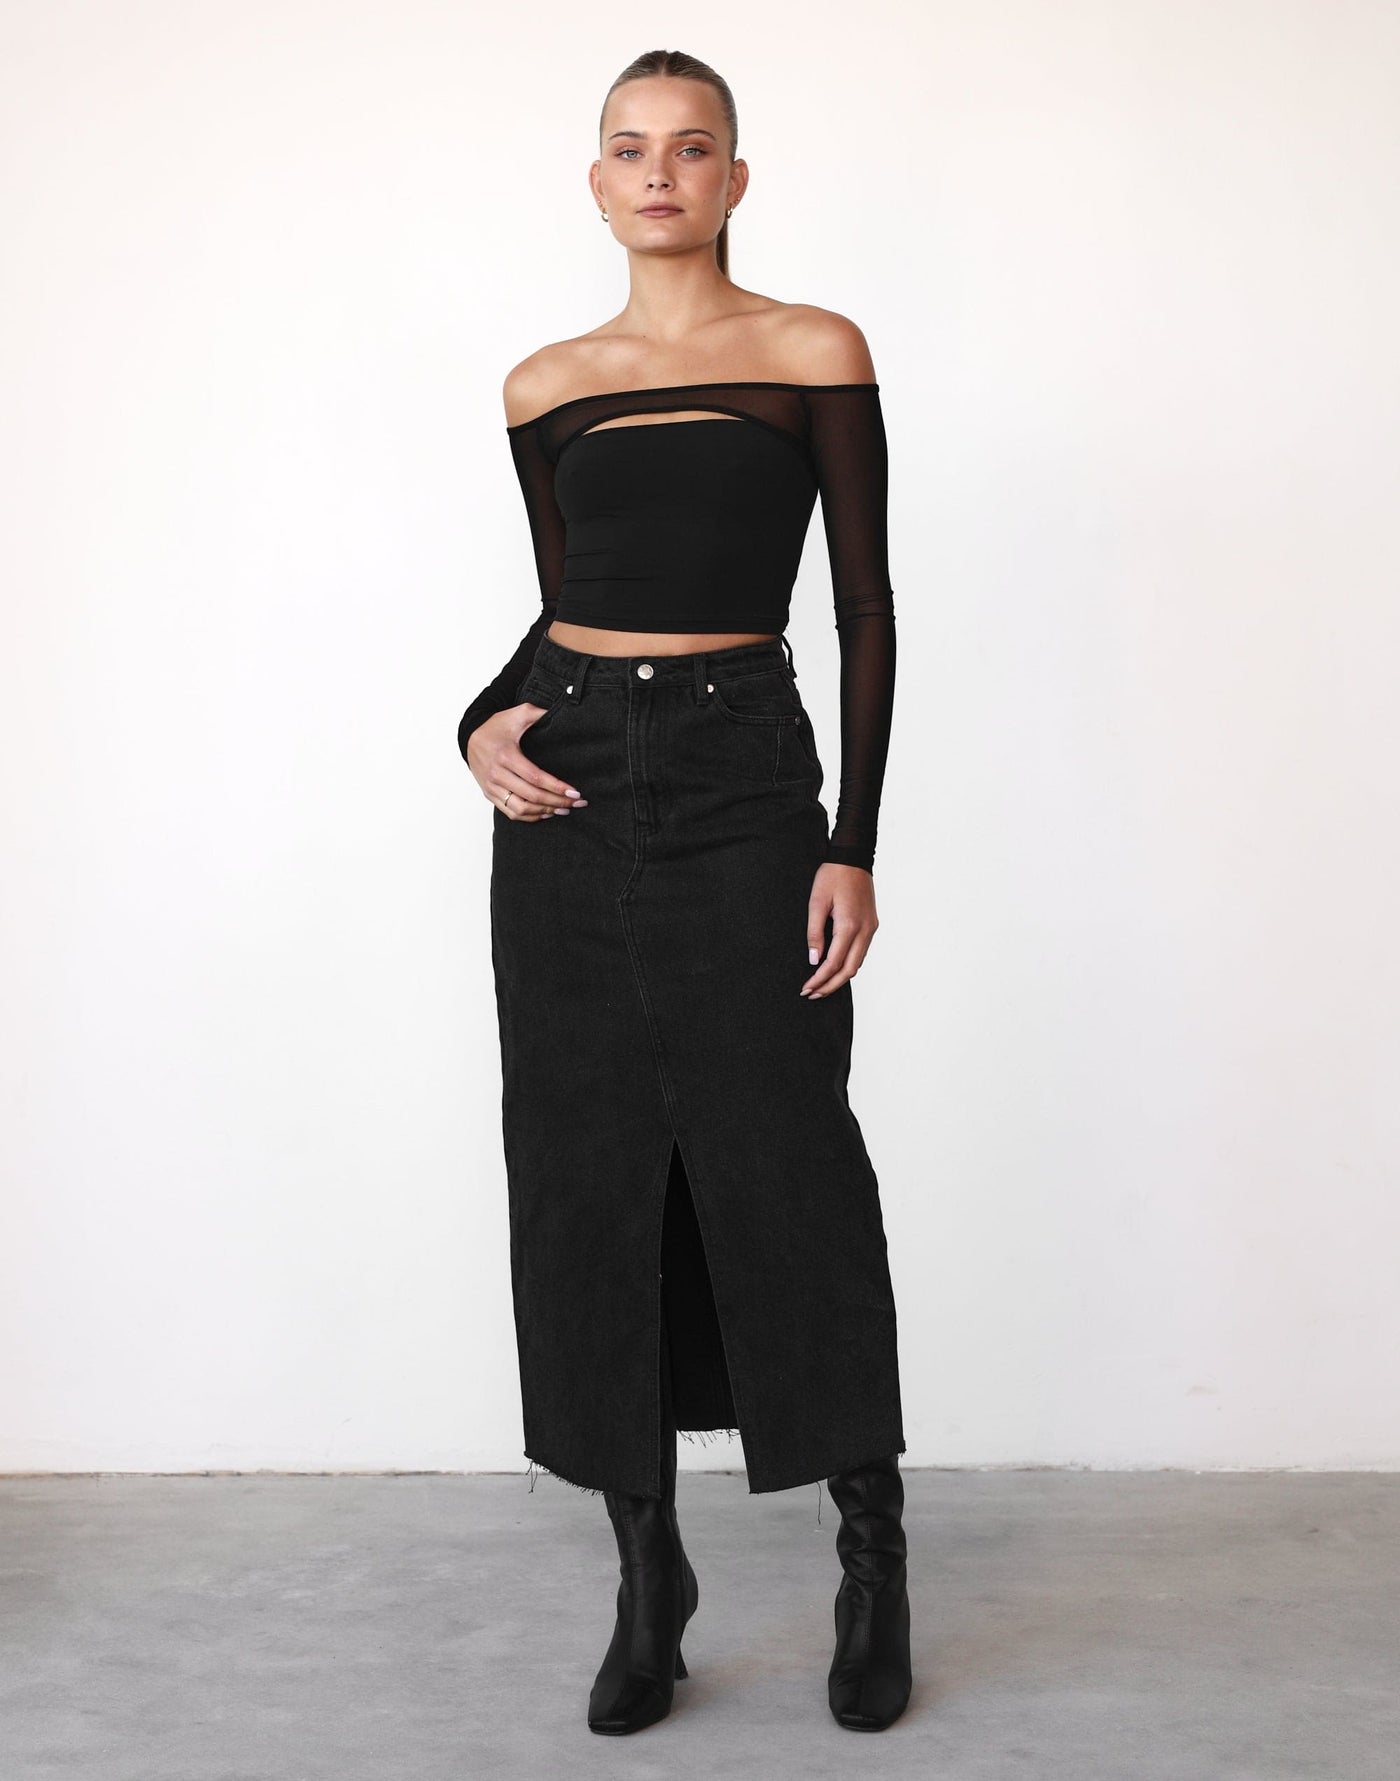 Dynamic Long Sleeve Top (Black) - Mesh Long Sleeve Cut Out Crop Top - Women's Top - Charcoal Clothing